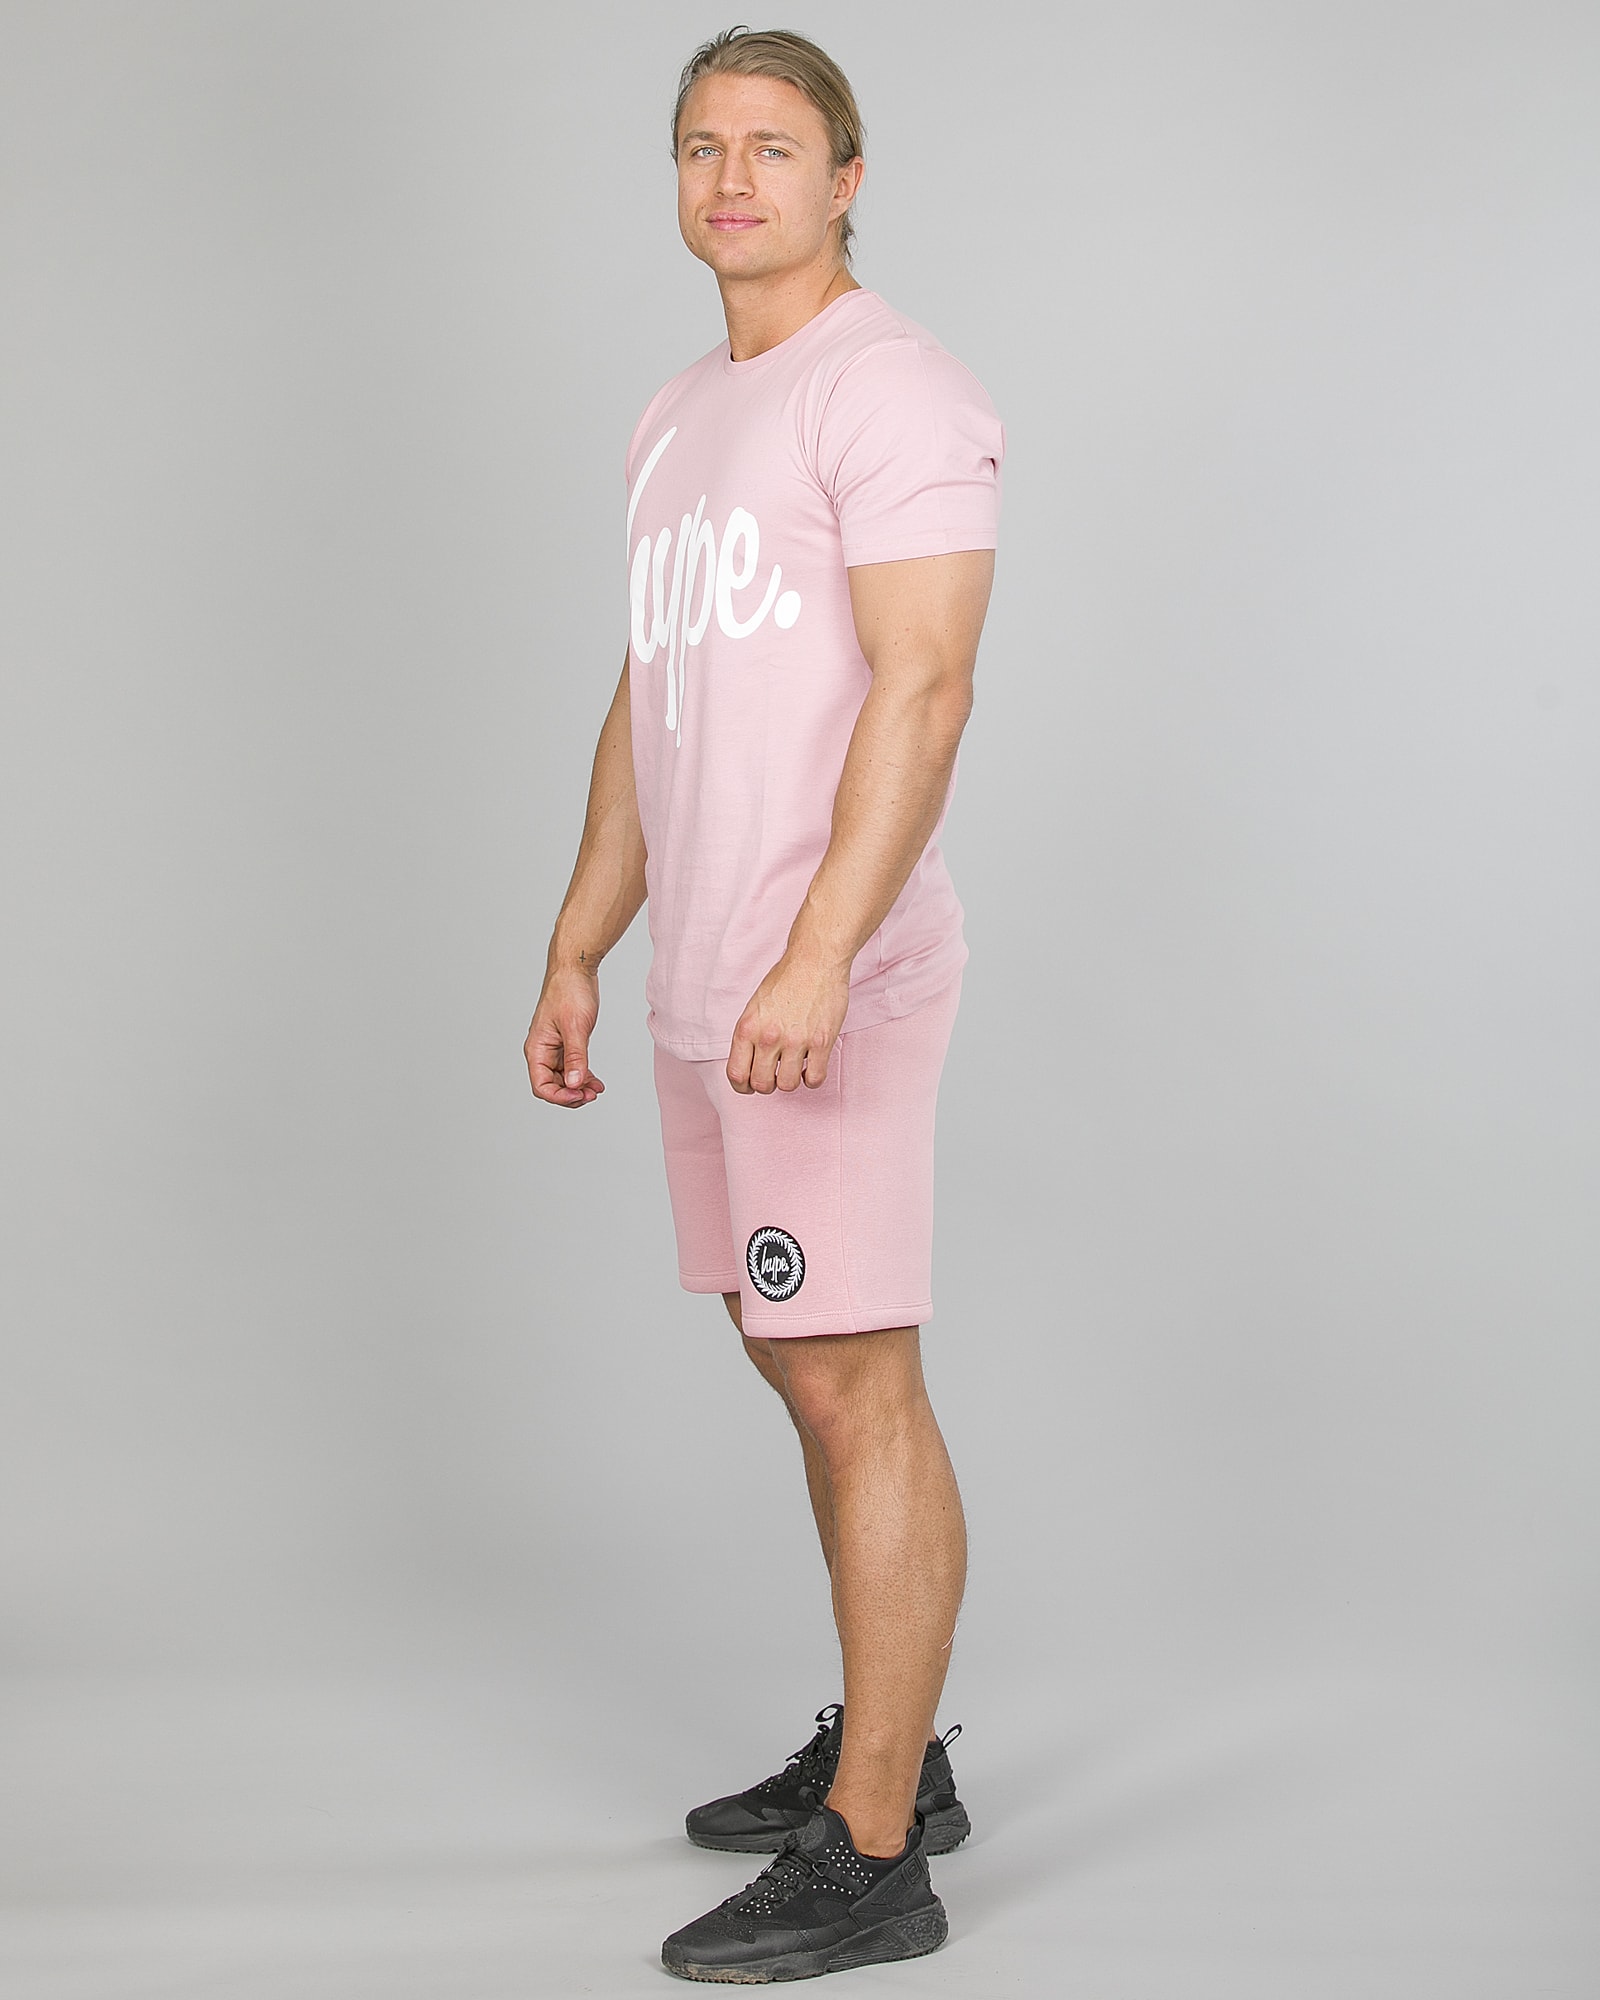 Hype Script T-Shirt Men ss18004 Pink and Crest Shorts ss18330 Pink c